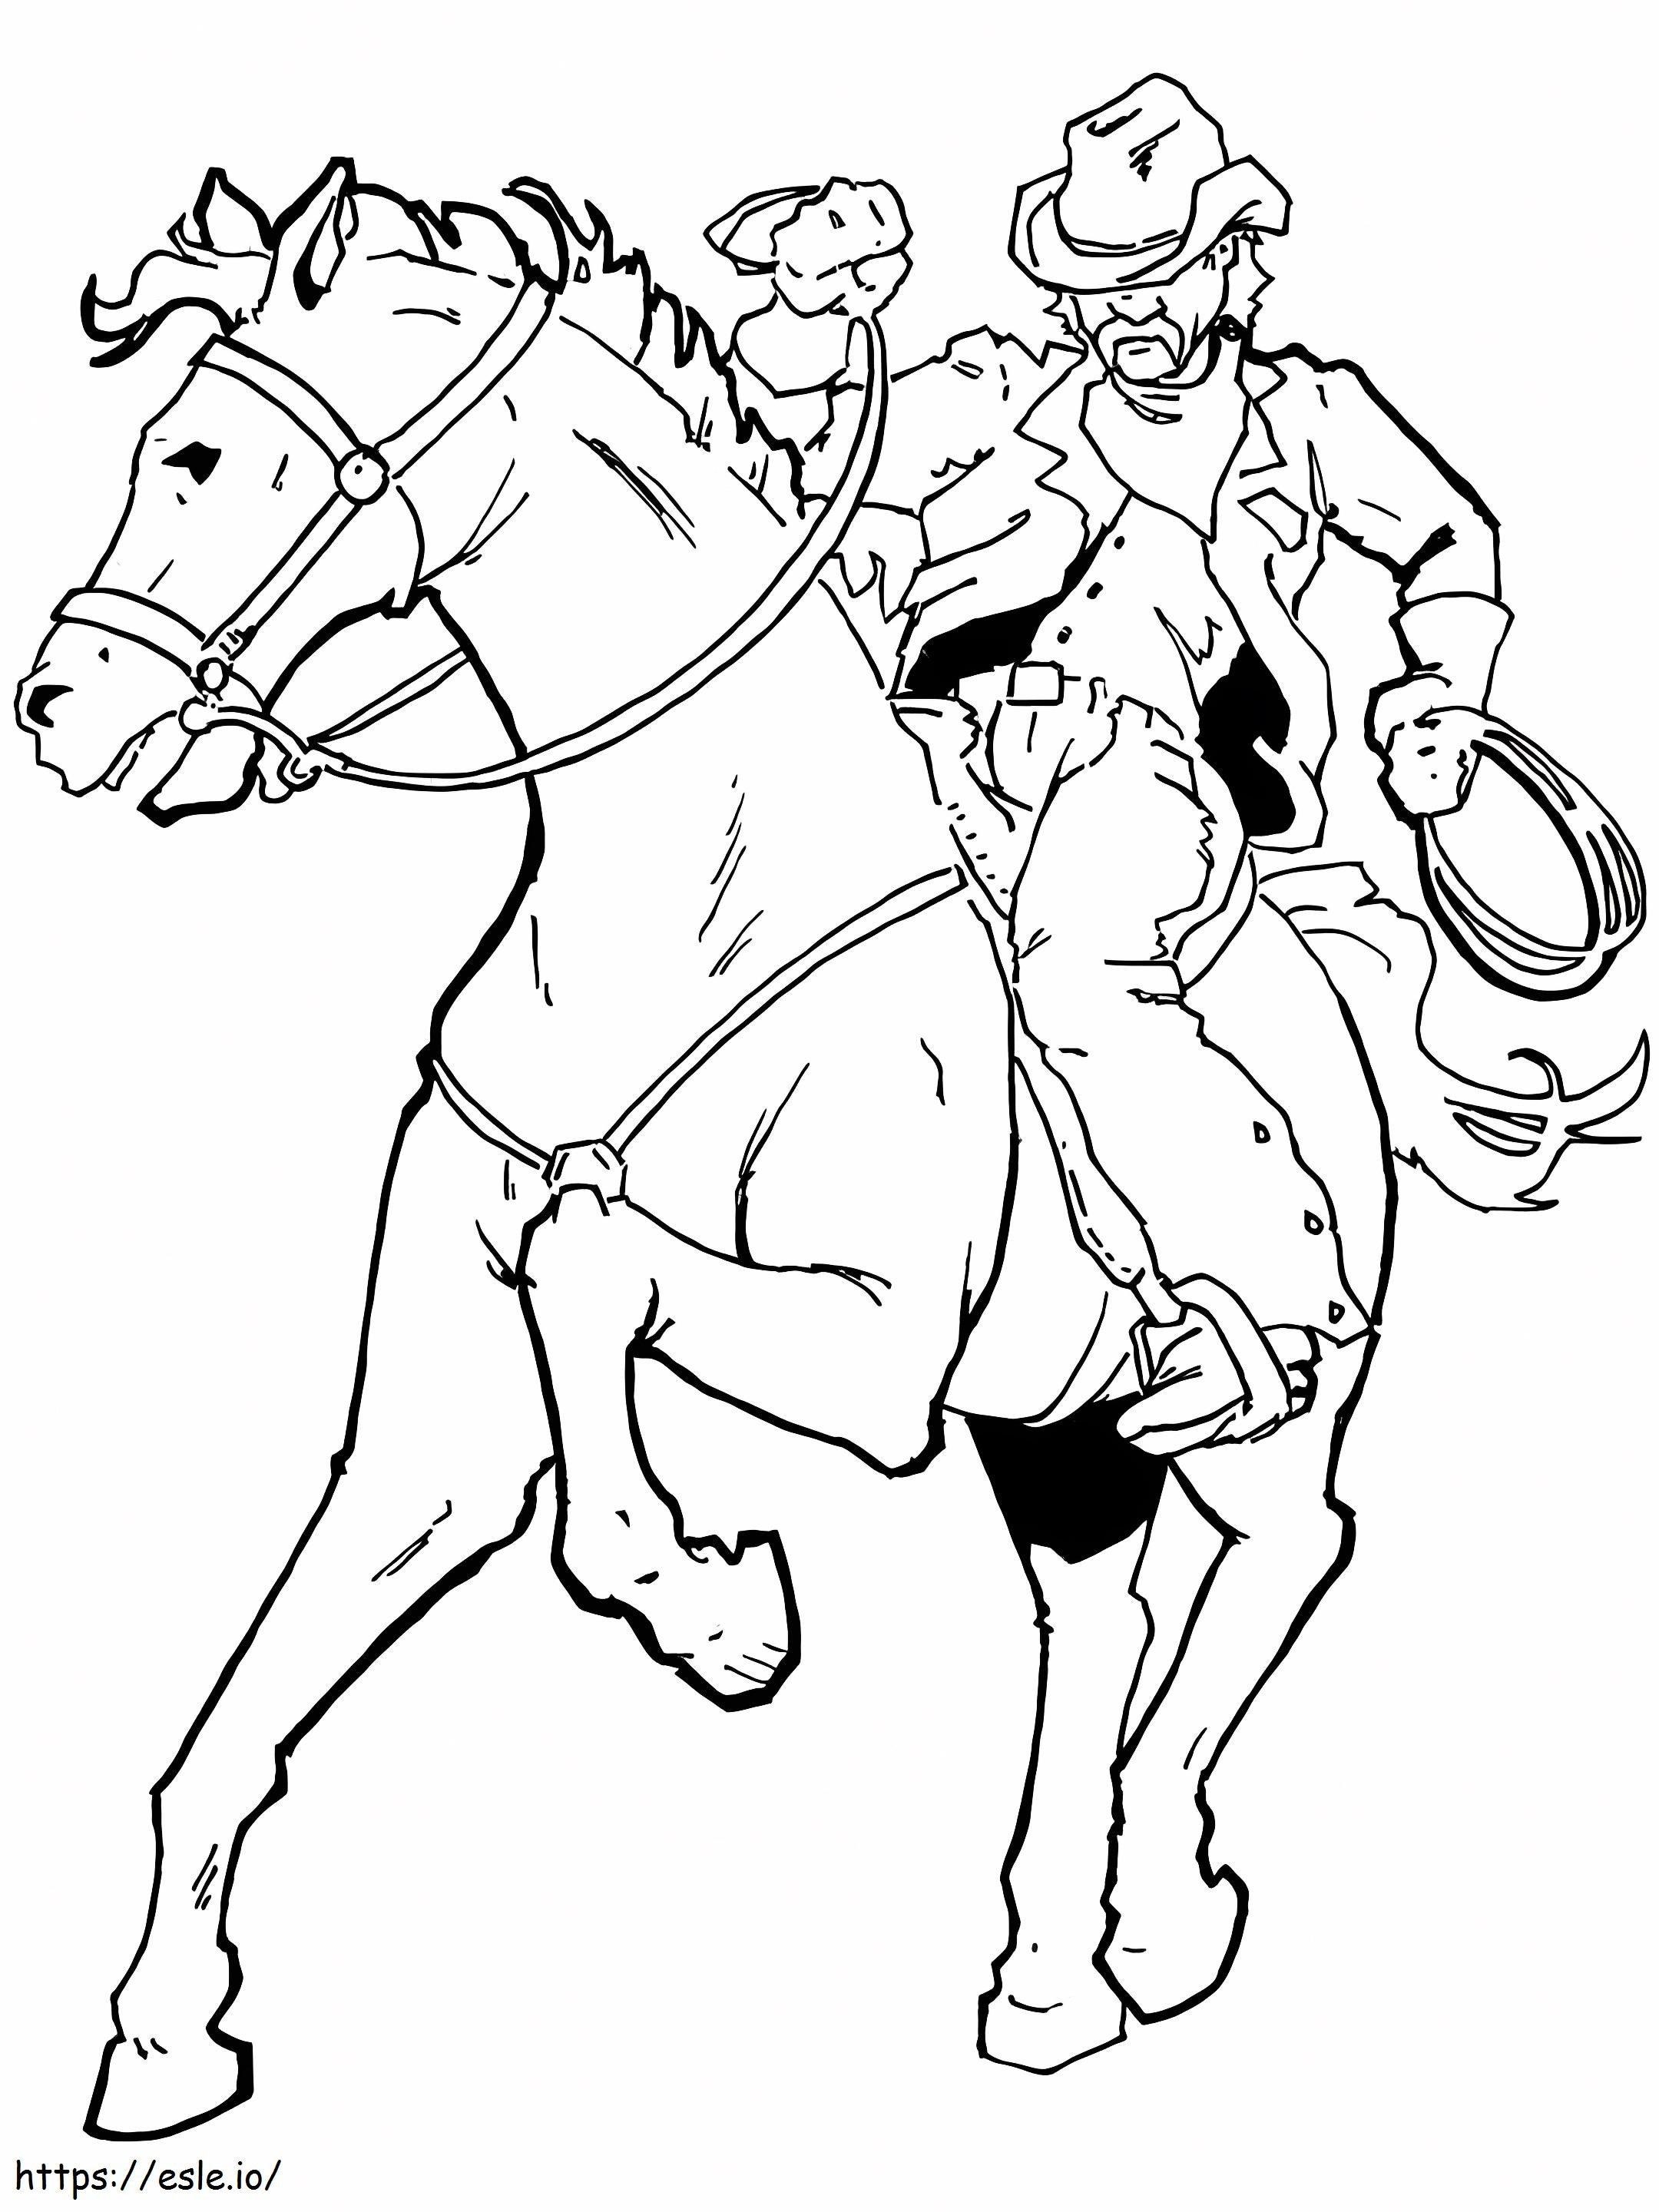 Cowboy Riding Horse coloring page